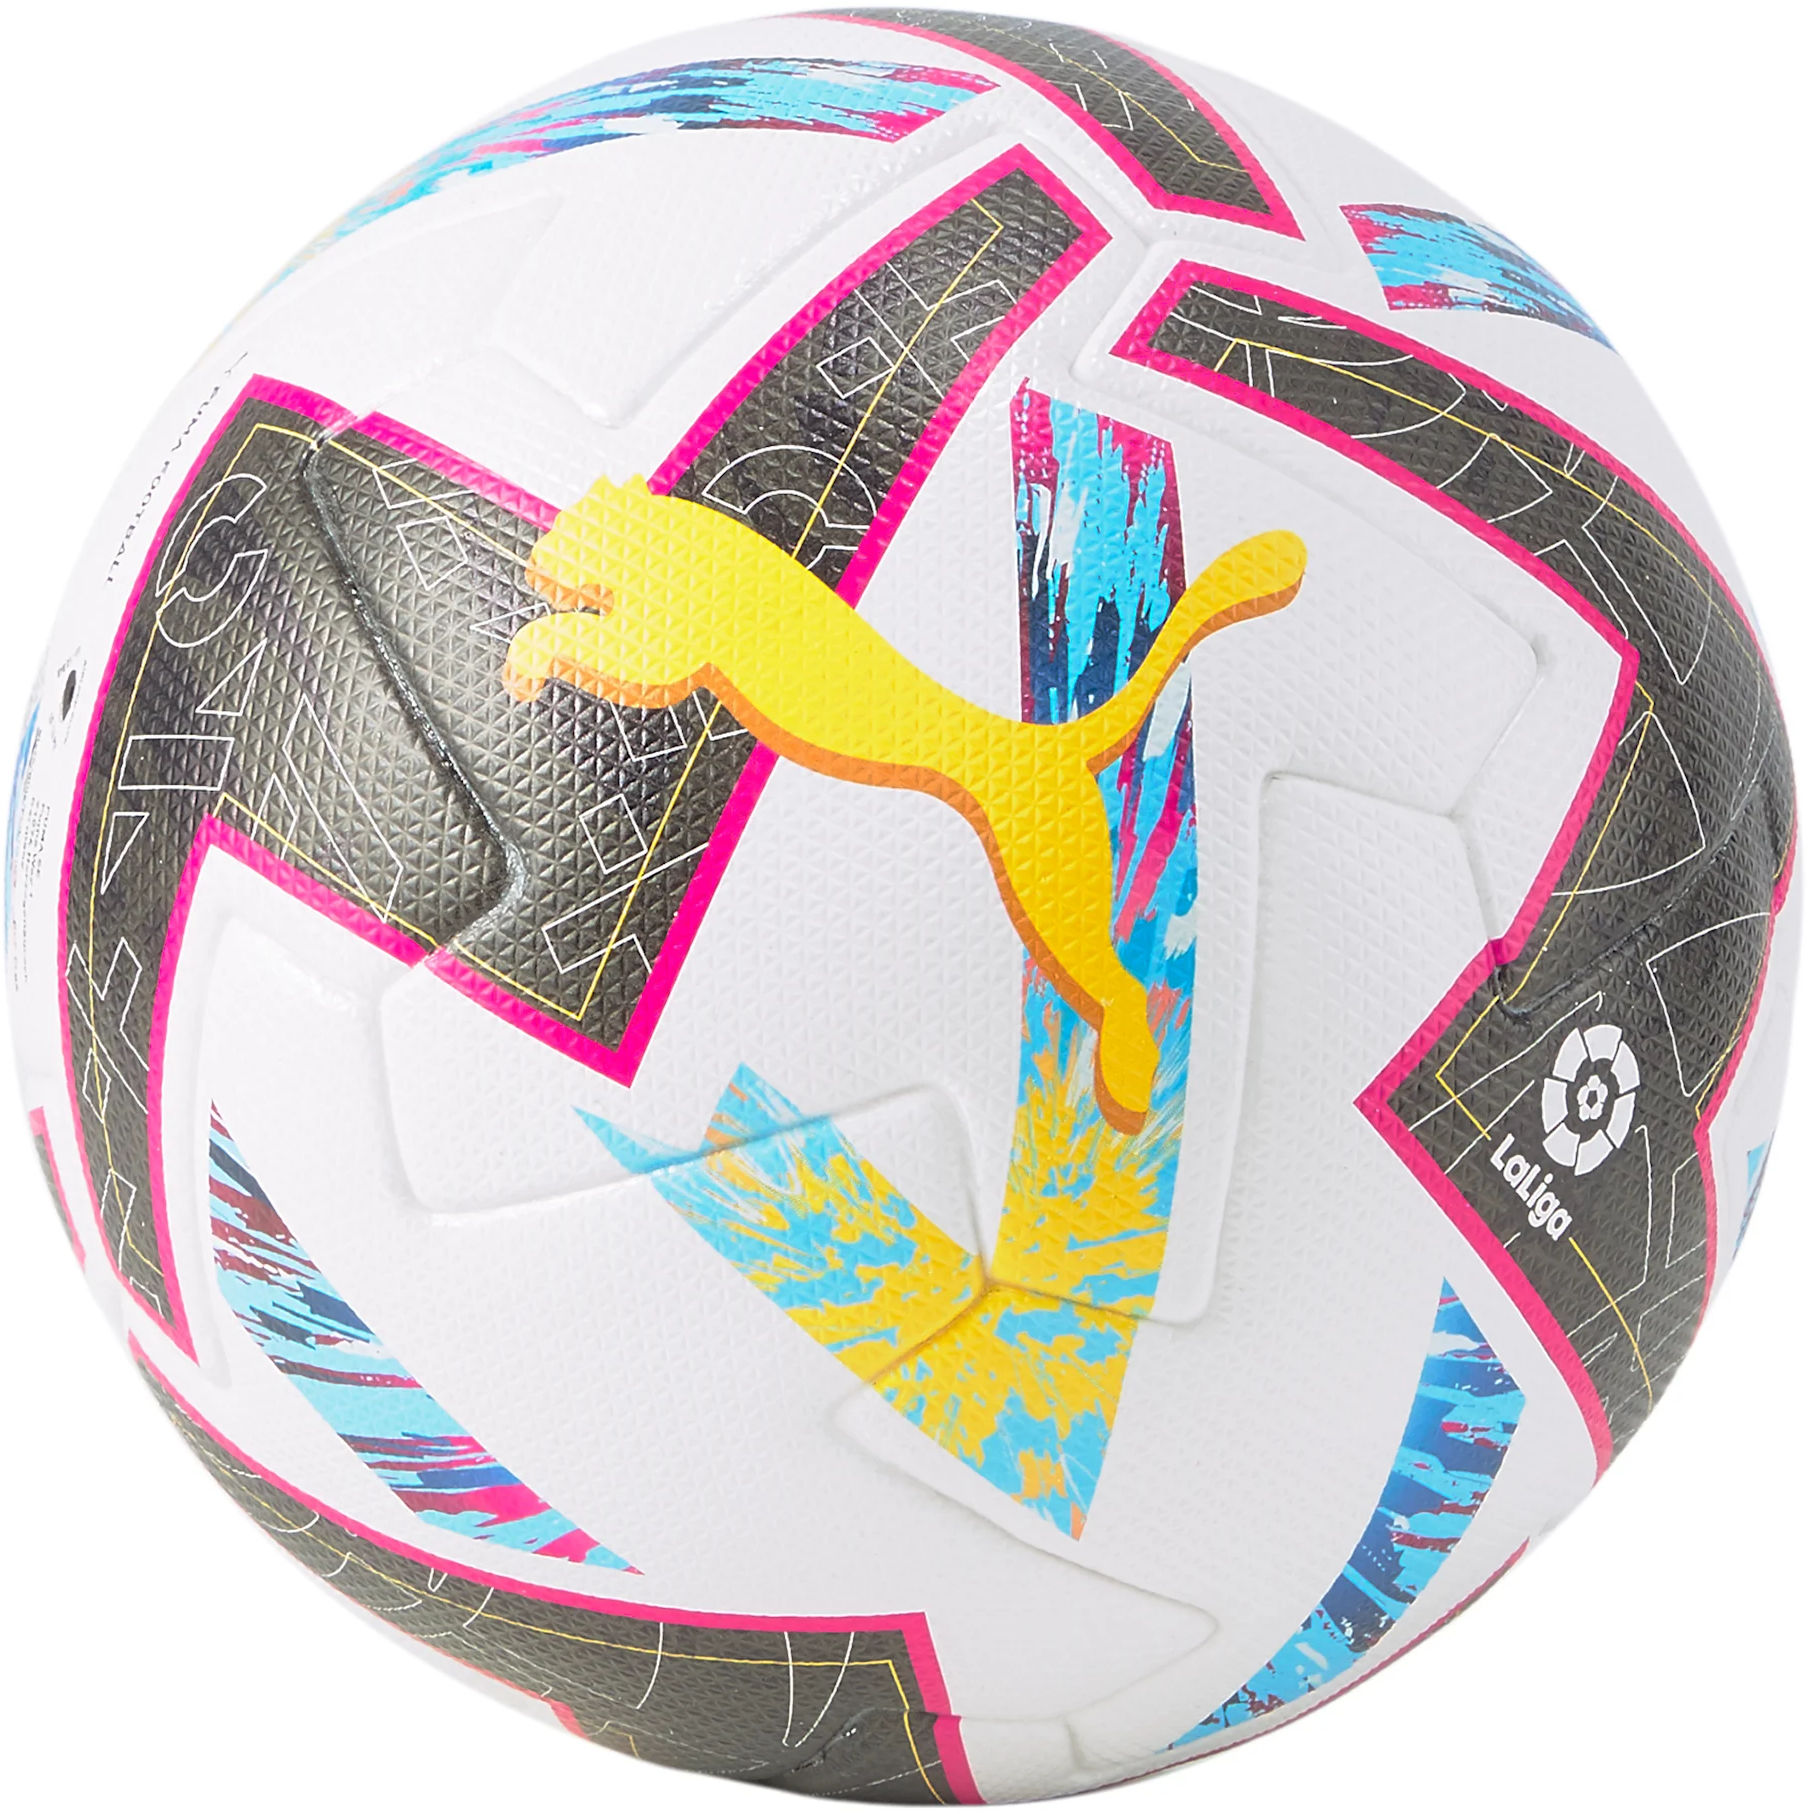 Ballon Puma Orbita LaLiga 1 (FIFA Quality Pro)